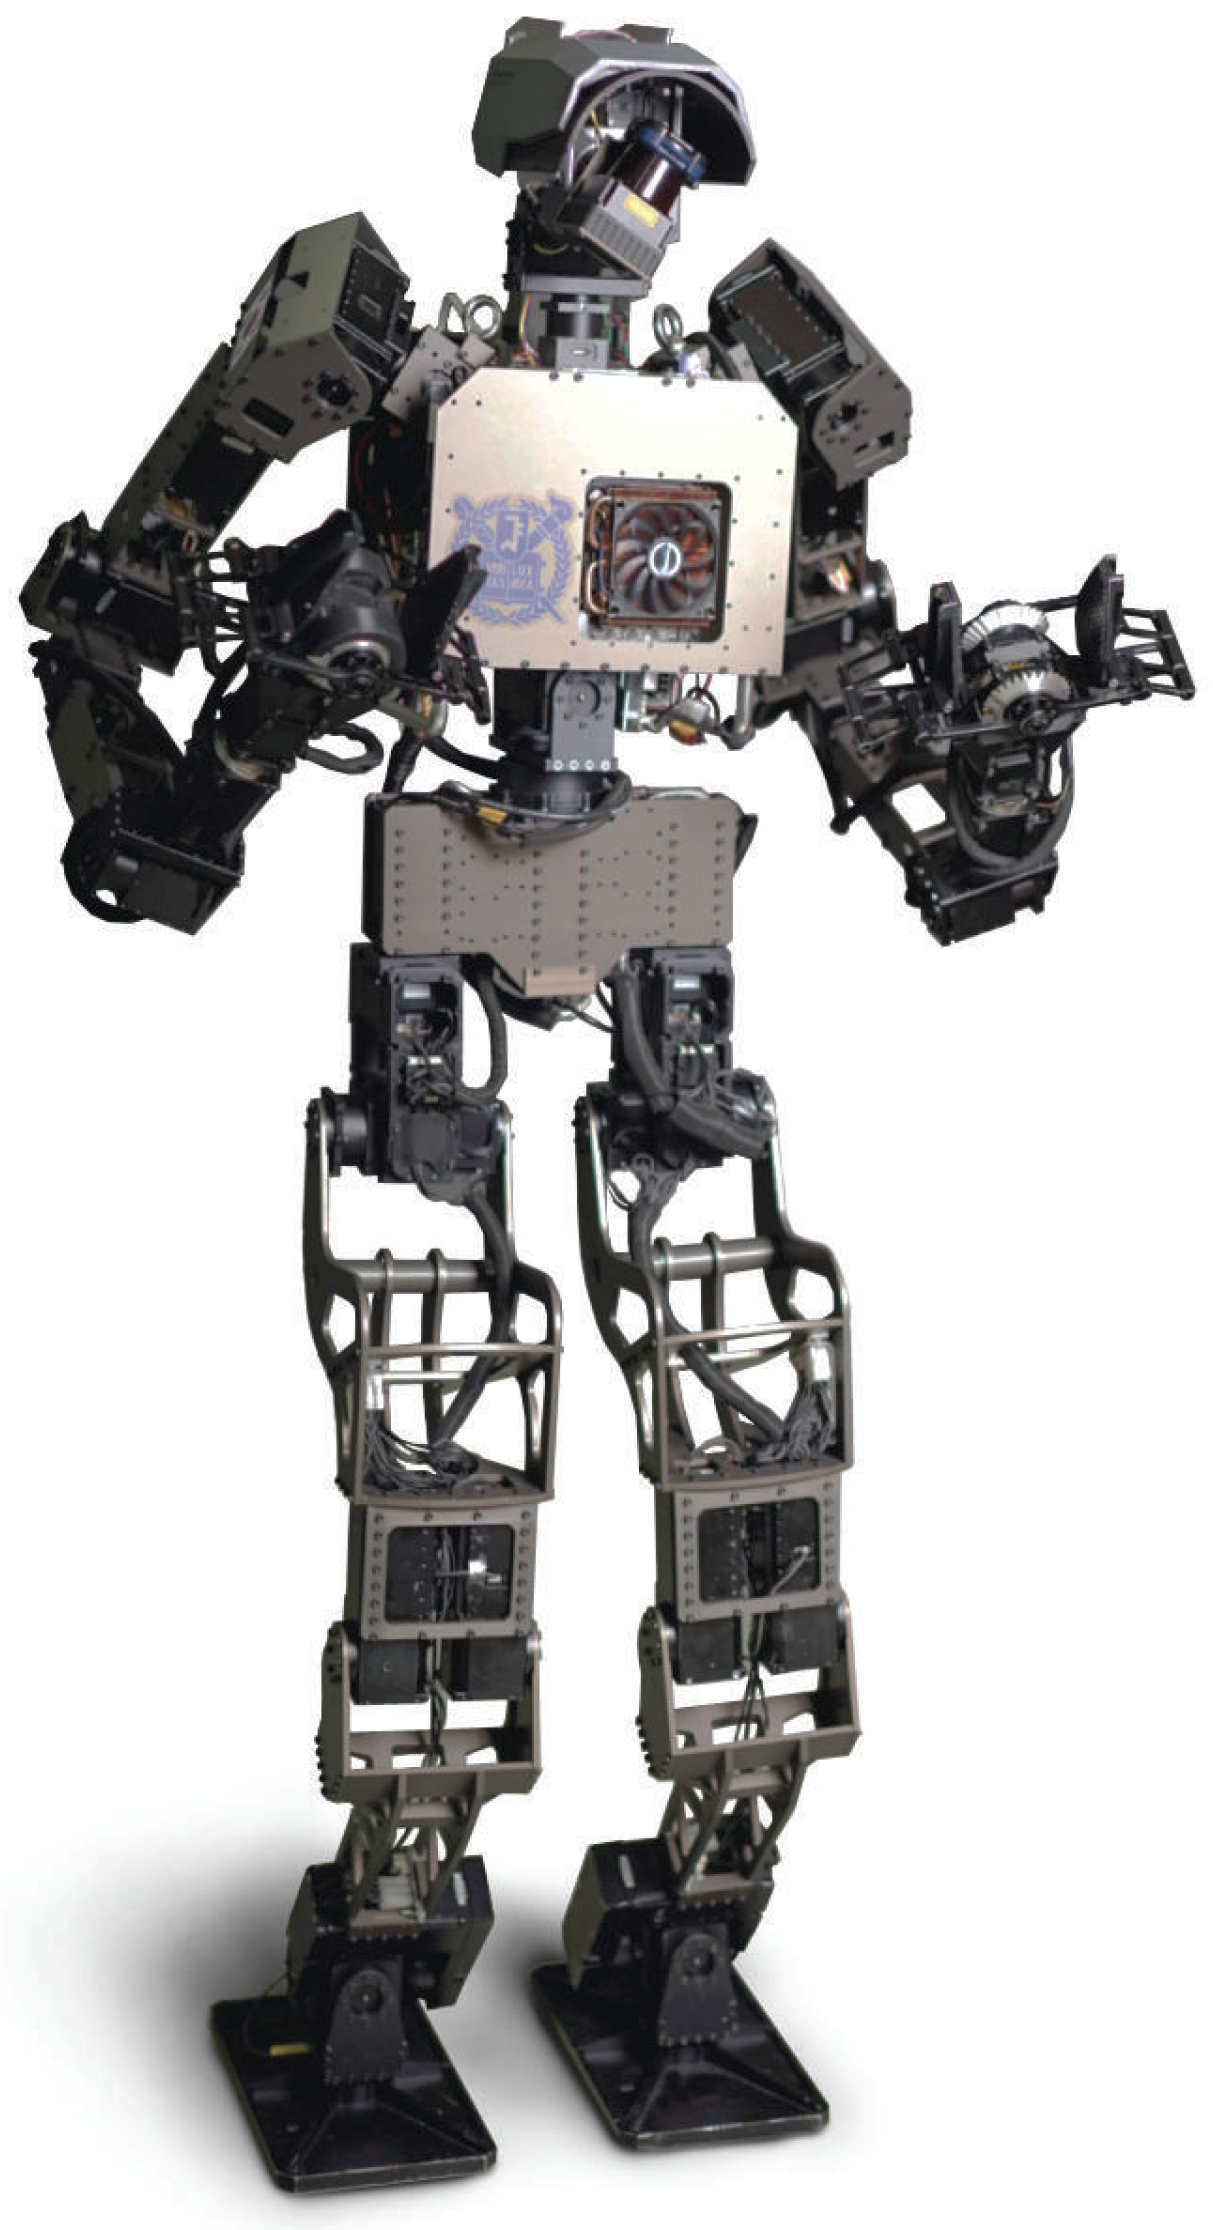 TALOS - The walking biped humanoid robot